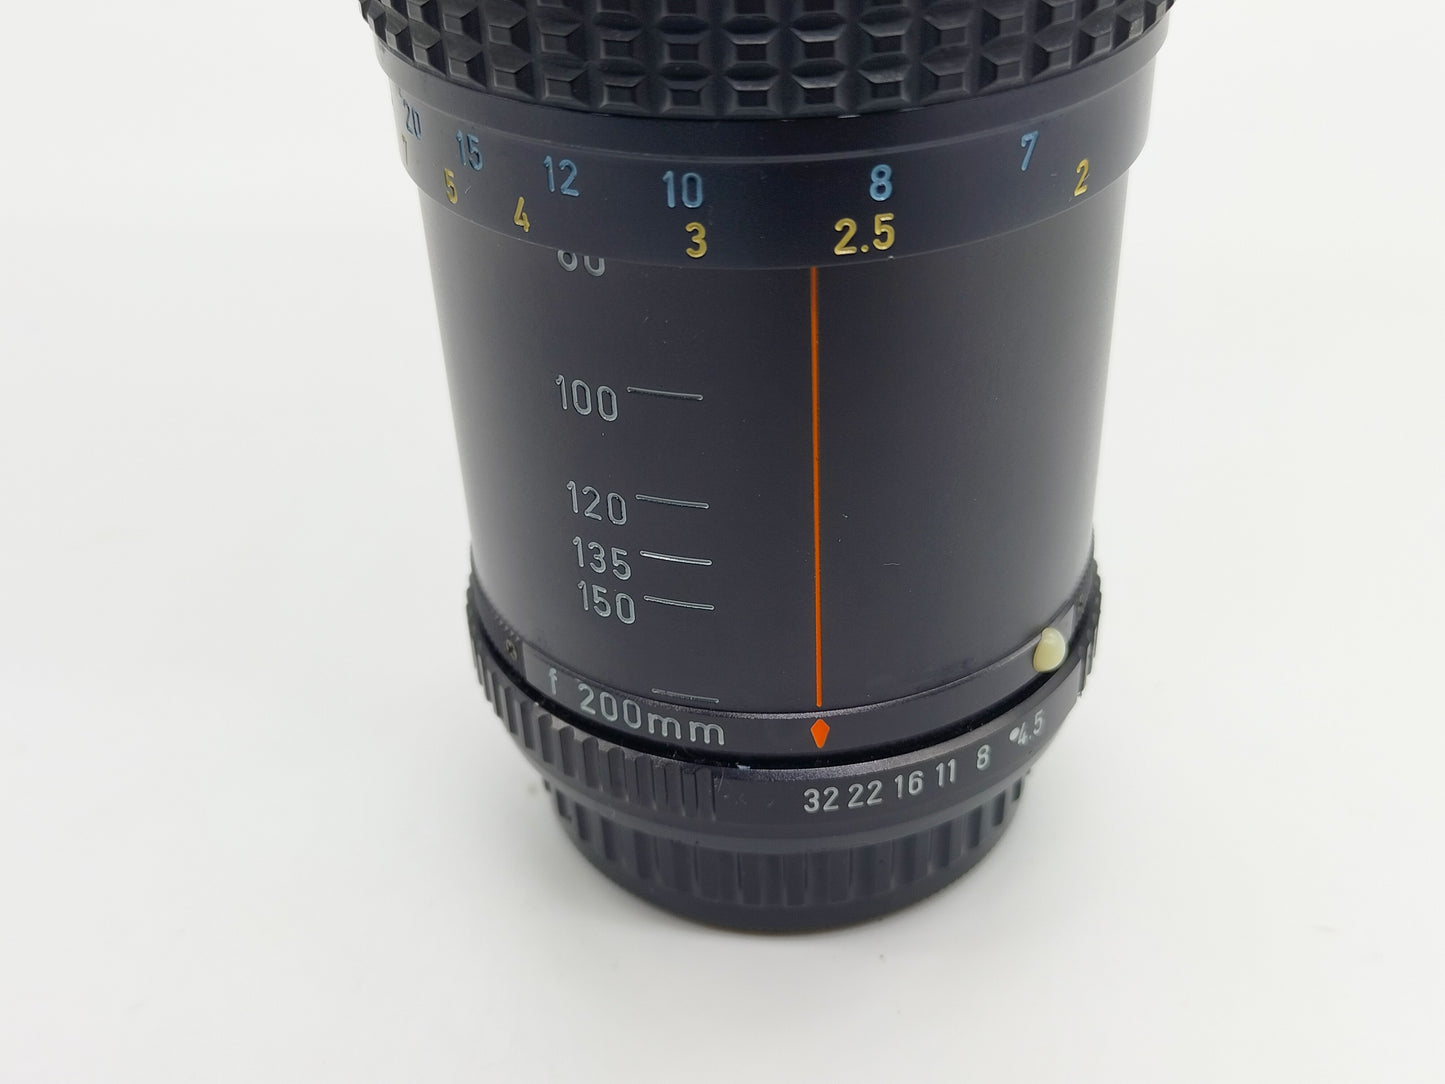 Pentax 80-200mm f/4.5 lens for Pentax K1000 / MX / ME / ME-Super